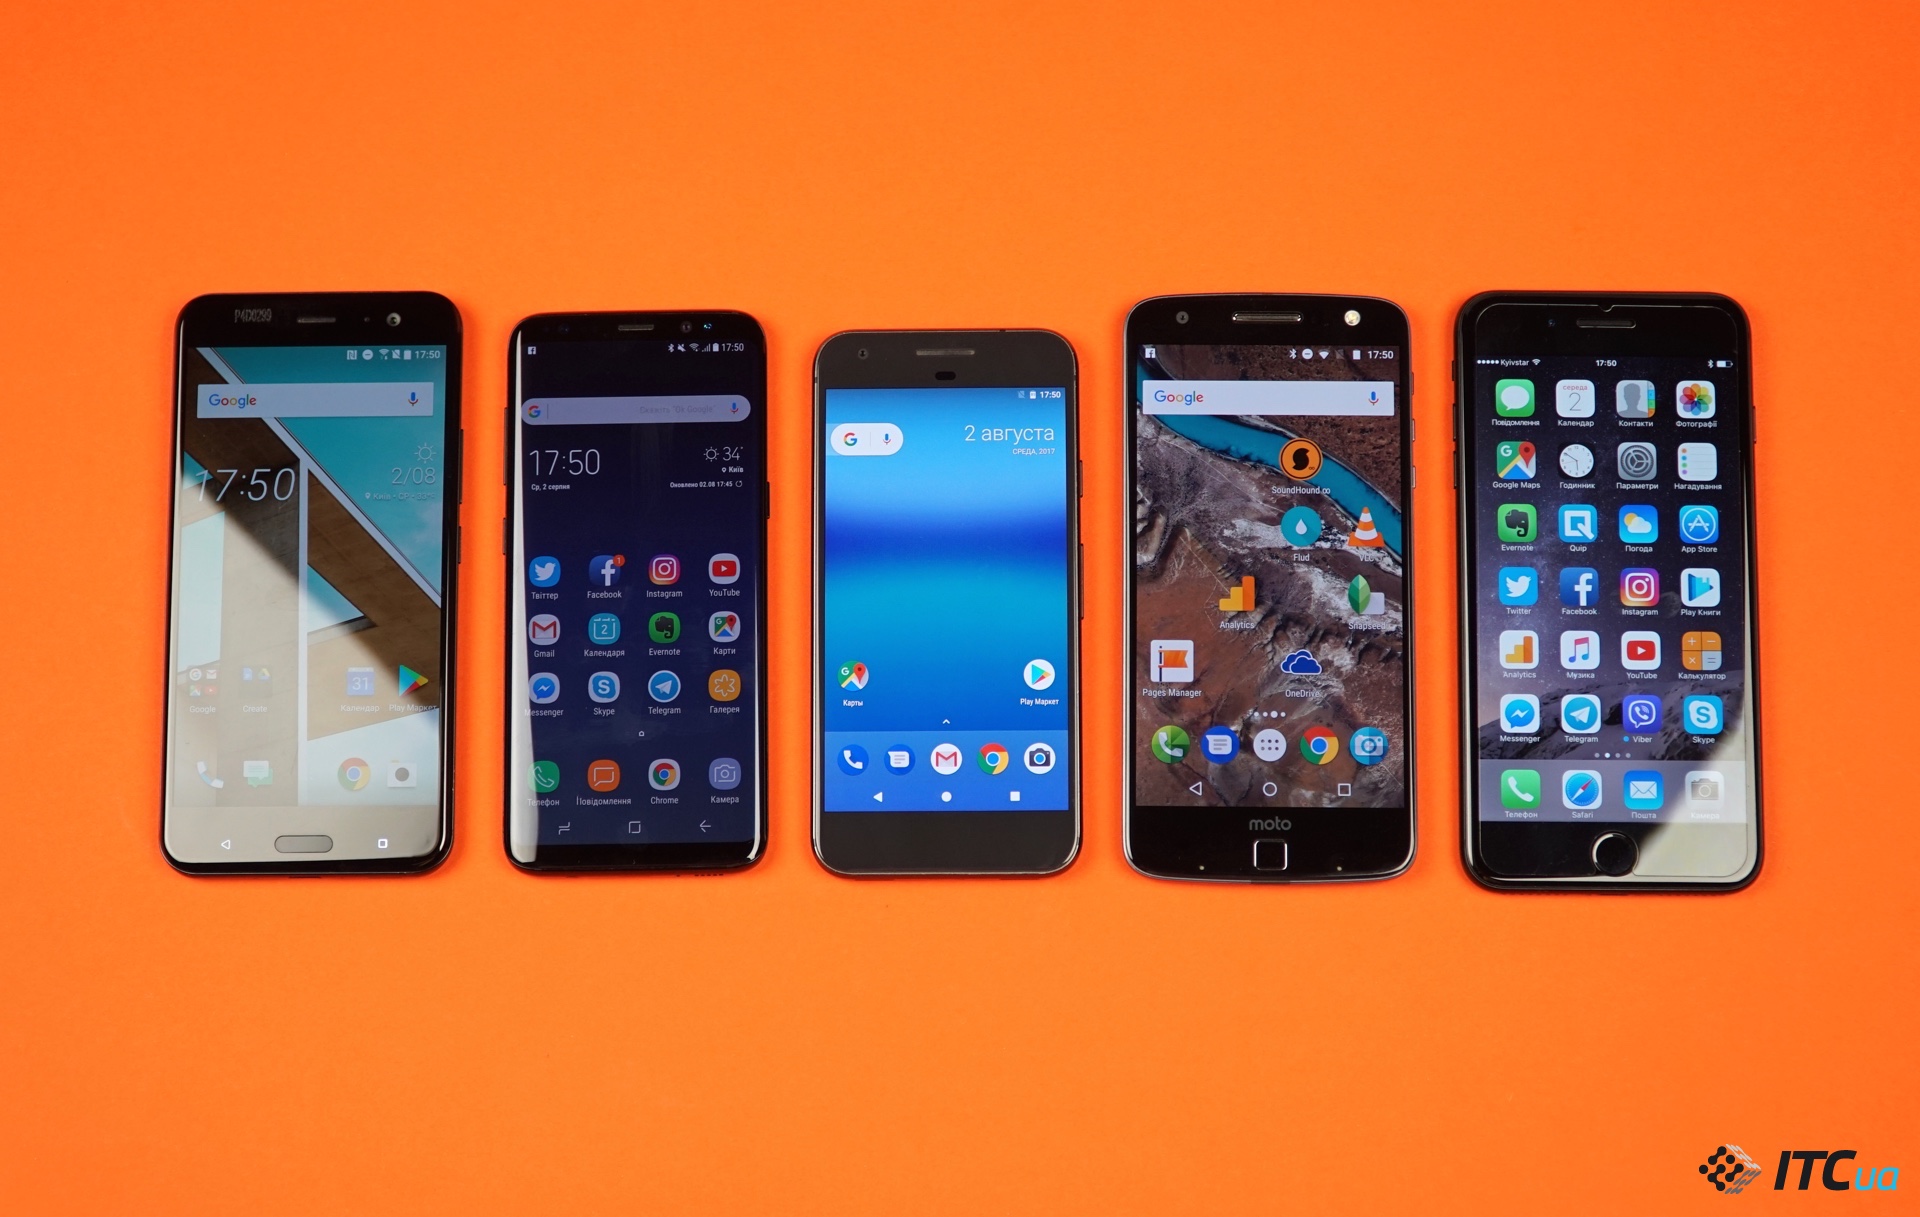 Камера Google Pixel против Galaxy S8, HTC U11, iPhone 7 Plus и Moto Z (голосование)